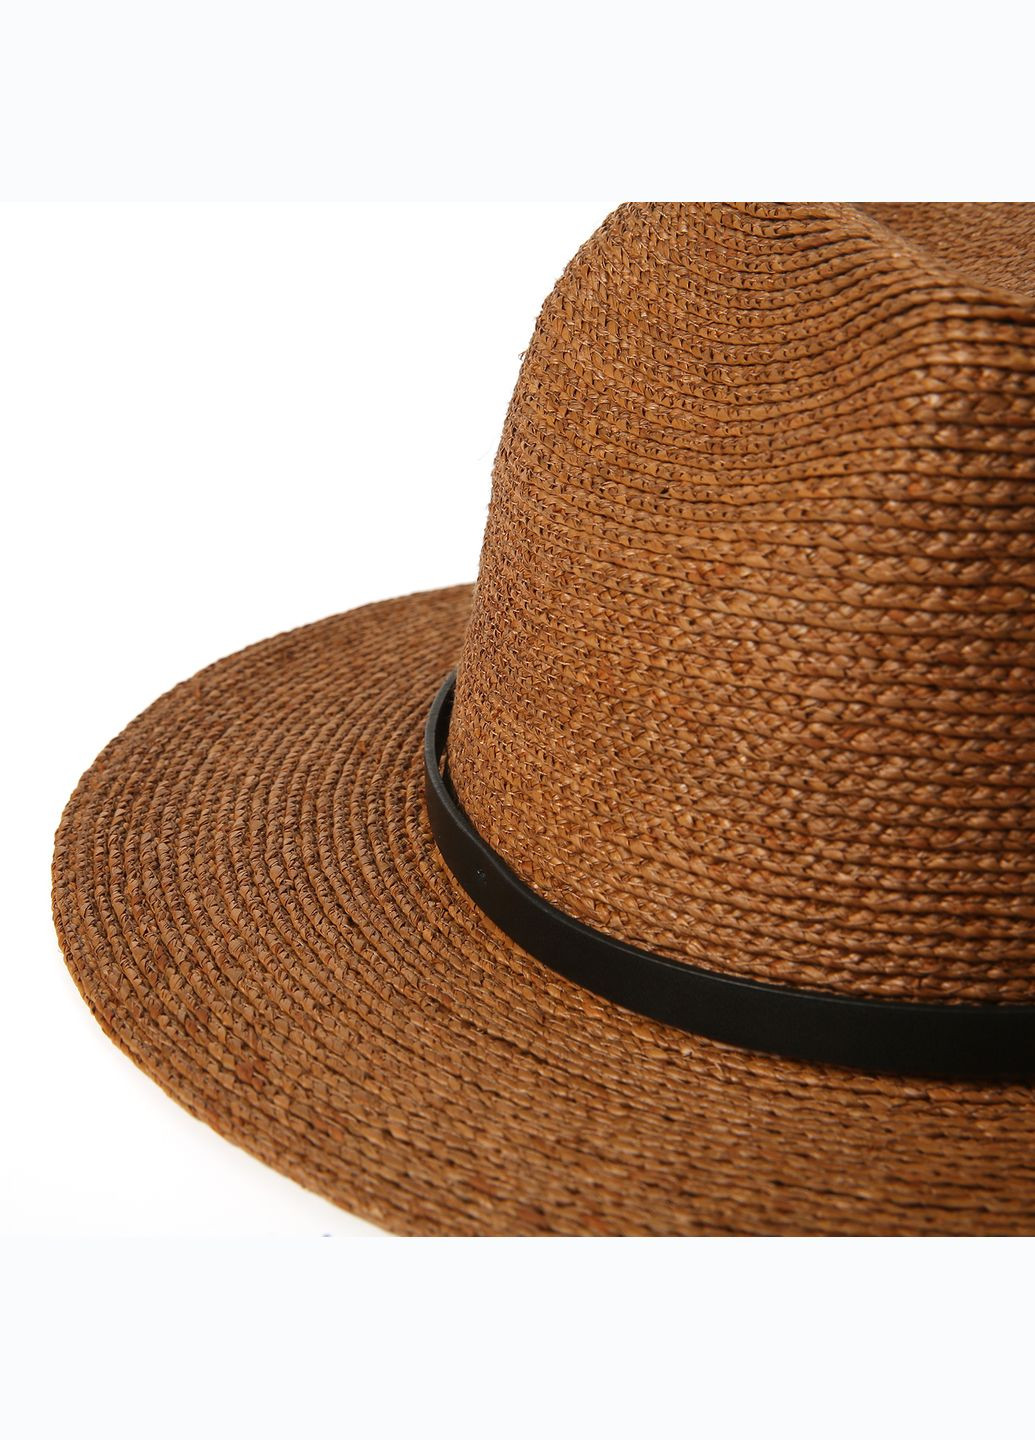 Шляпа федора мужская рафия коричневая KELLY 818-218 LuckyLOOK 818-218м (289478316)